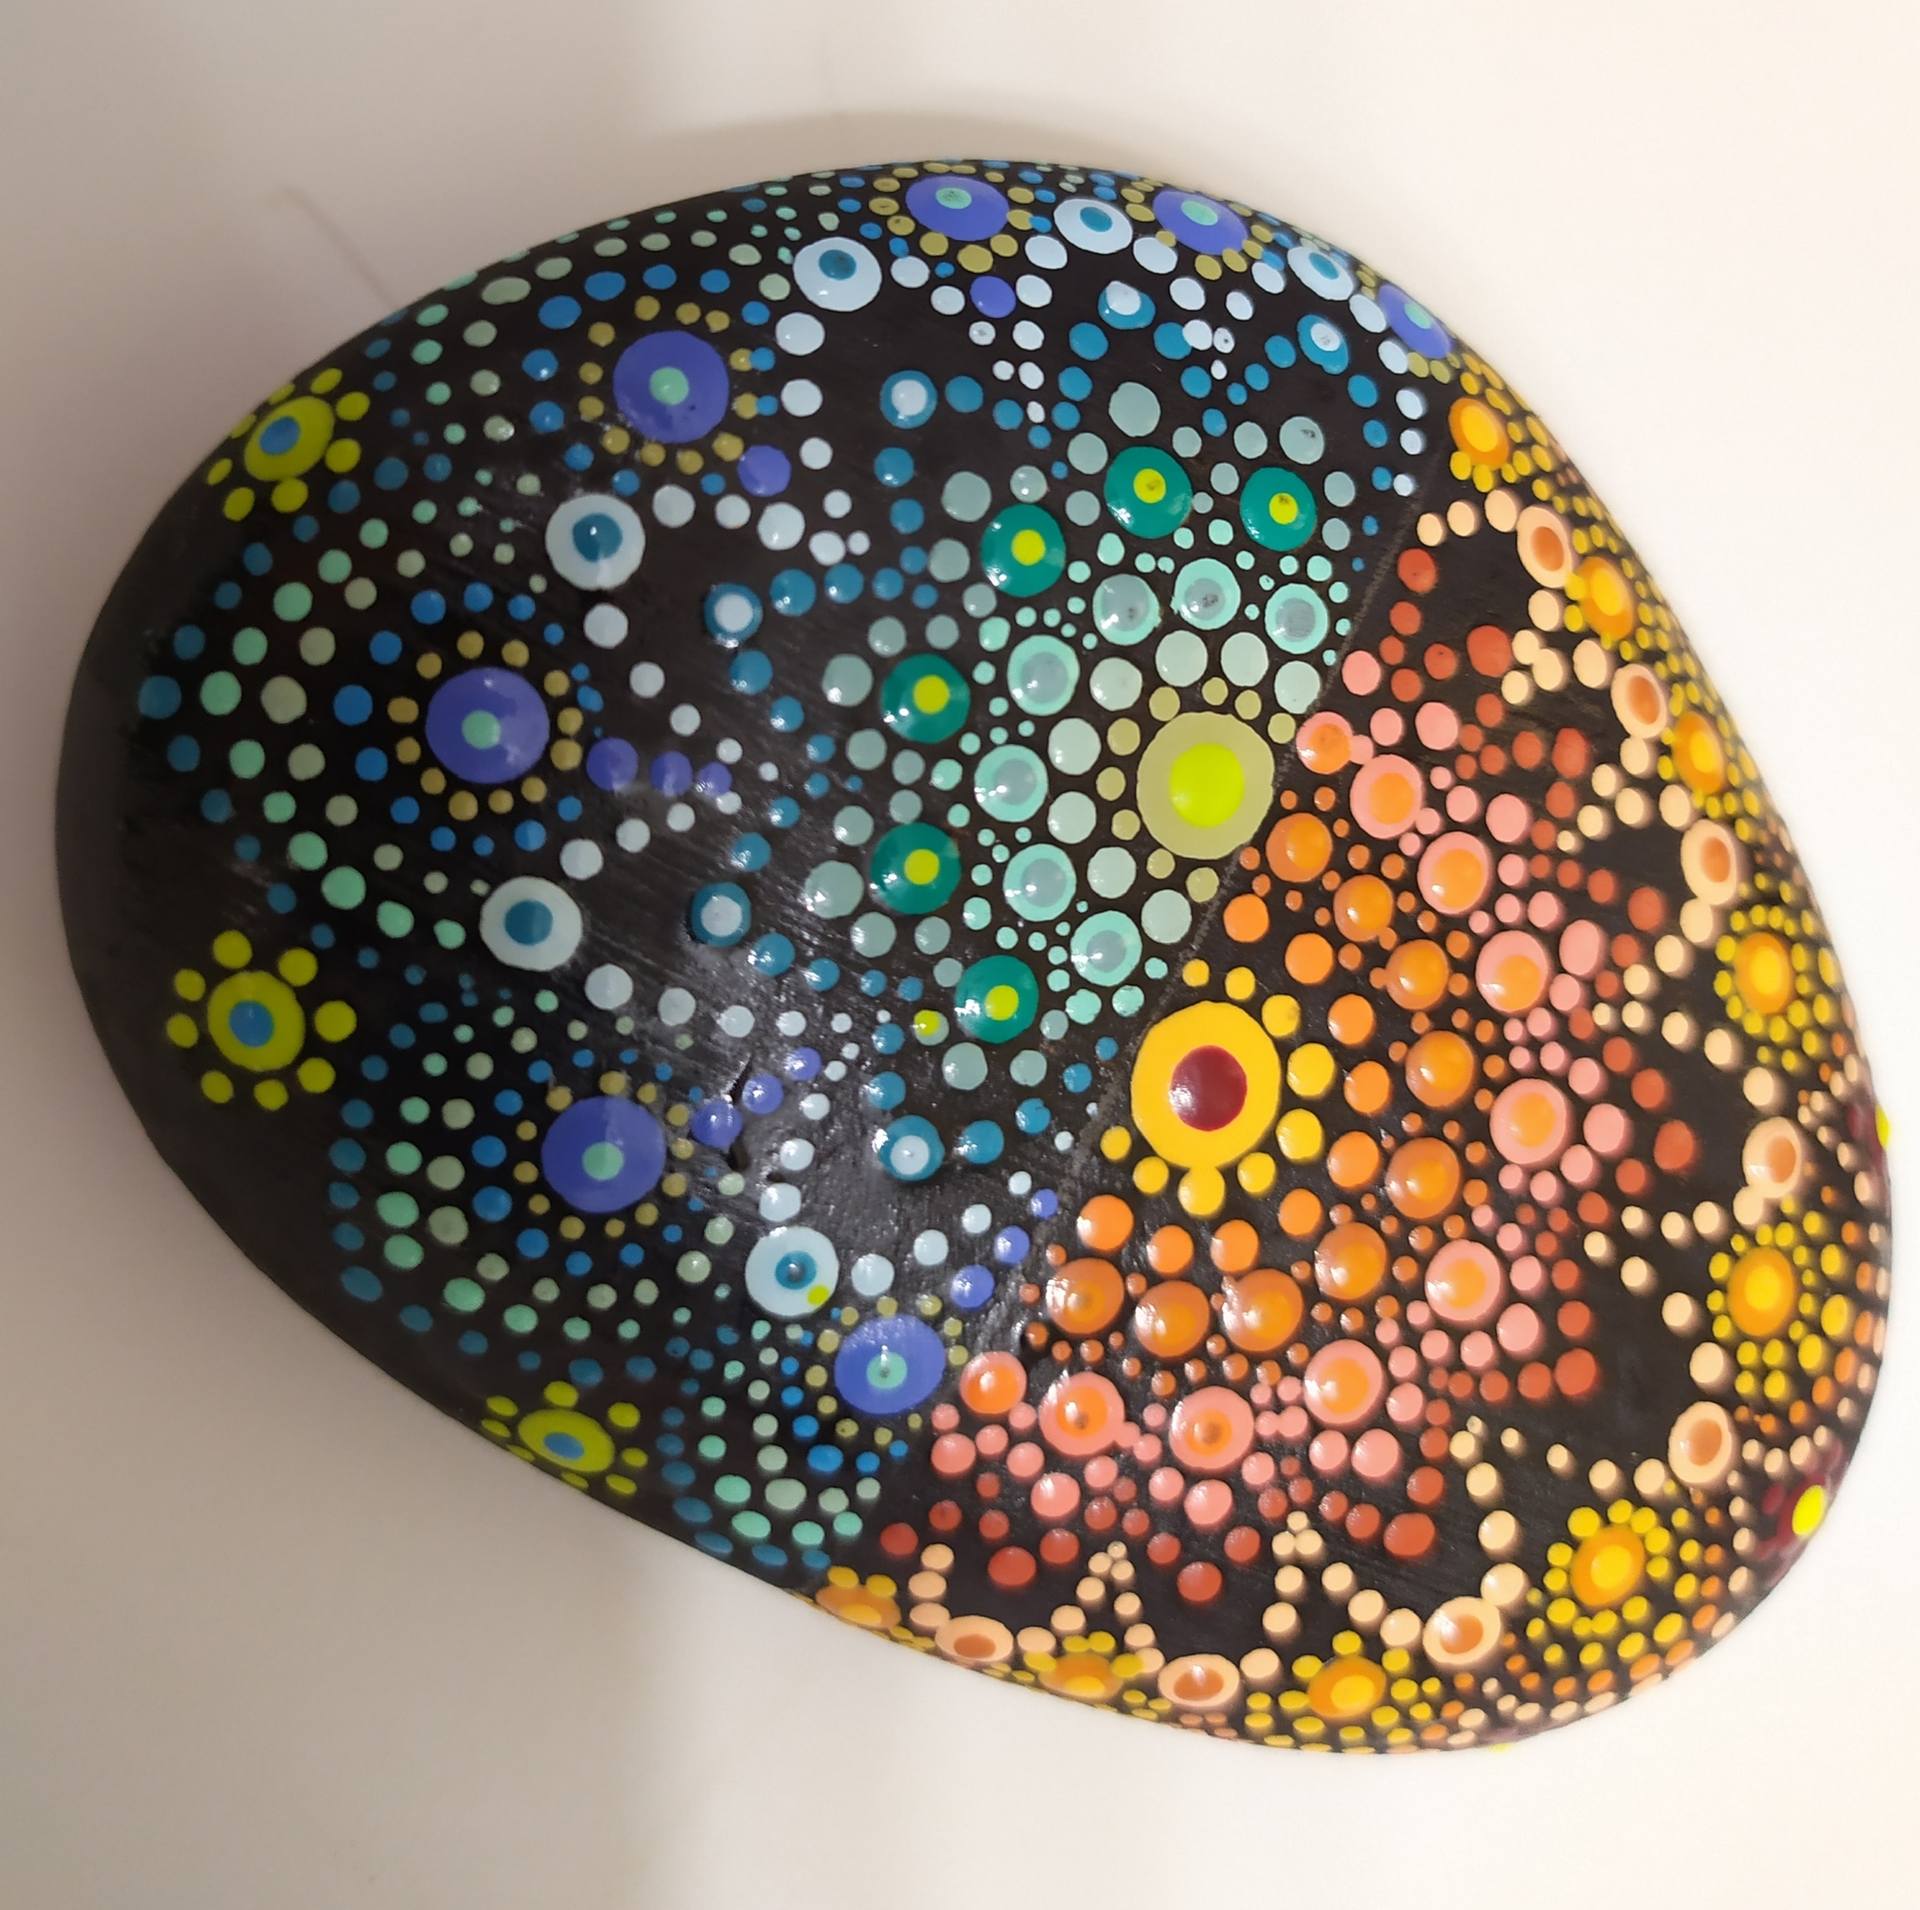 Unique Mandala Art Stone Painting Kit Includes Rocks 8 